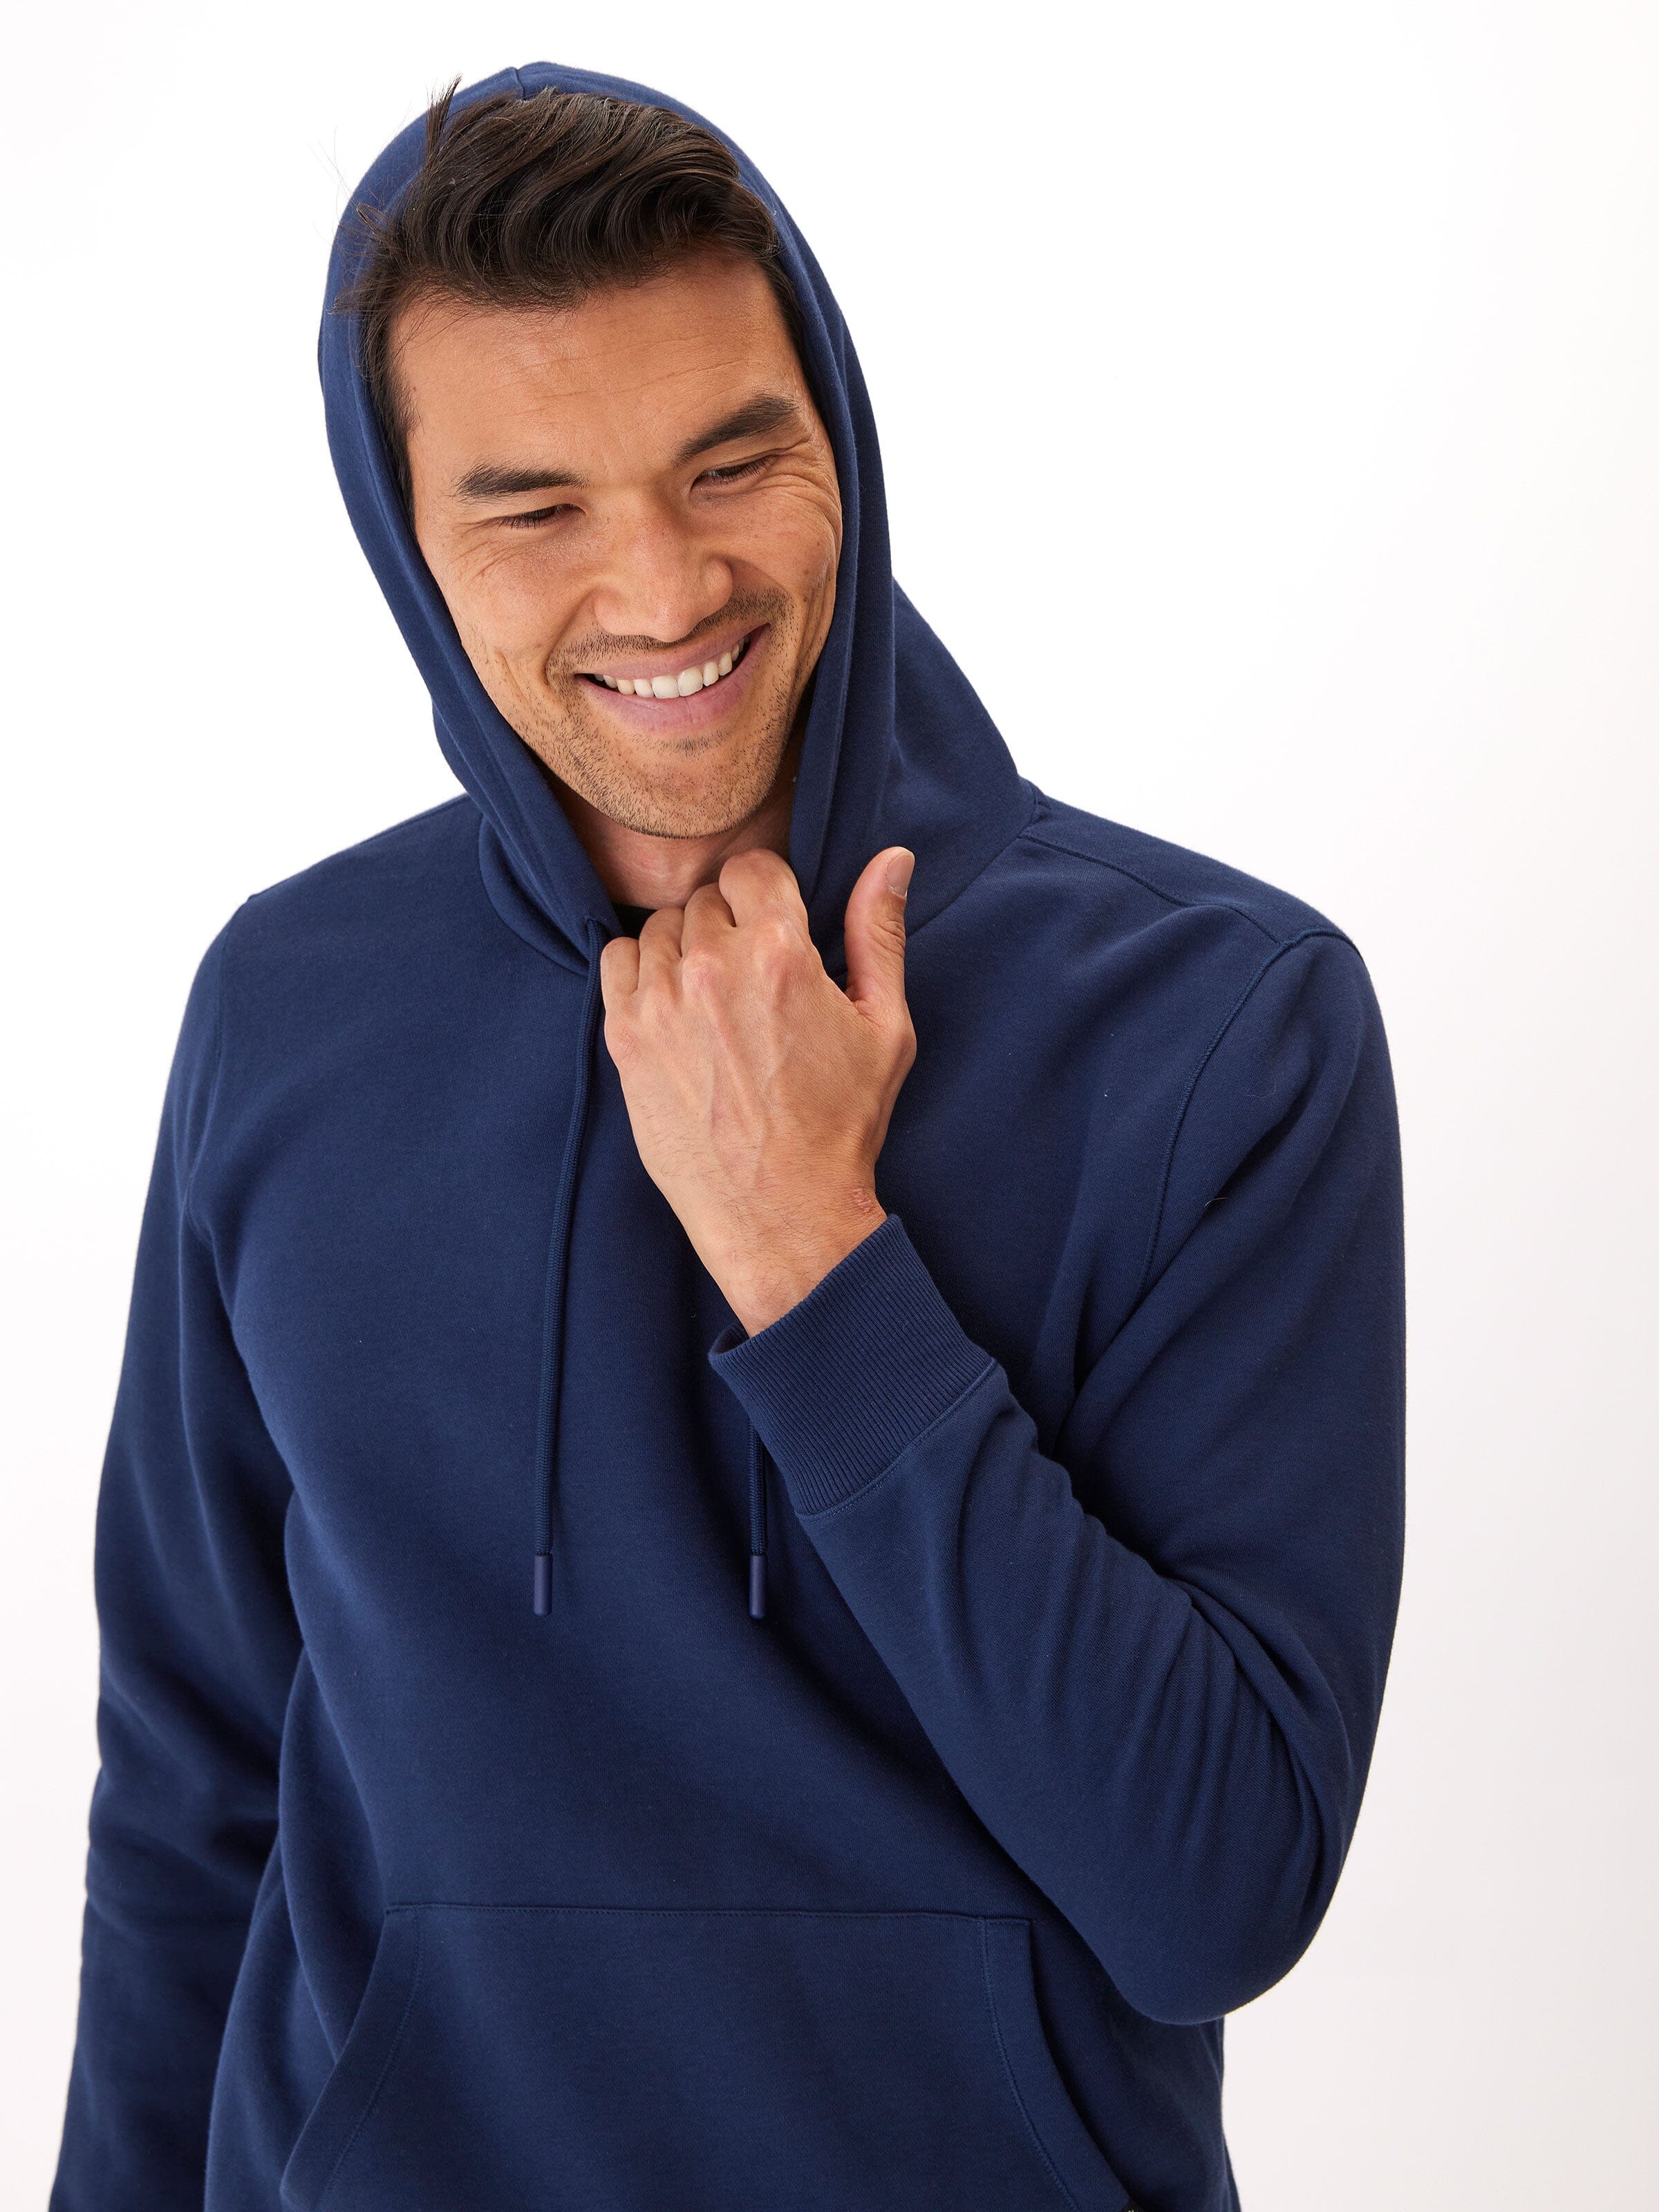 Men's Invincible Fleece Pullover Hoodie Mens Outerwear Sweatshirt Threads 4 Thought 